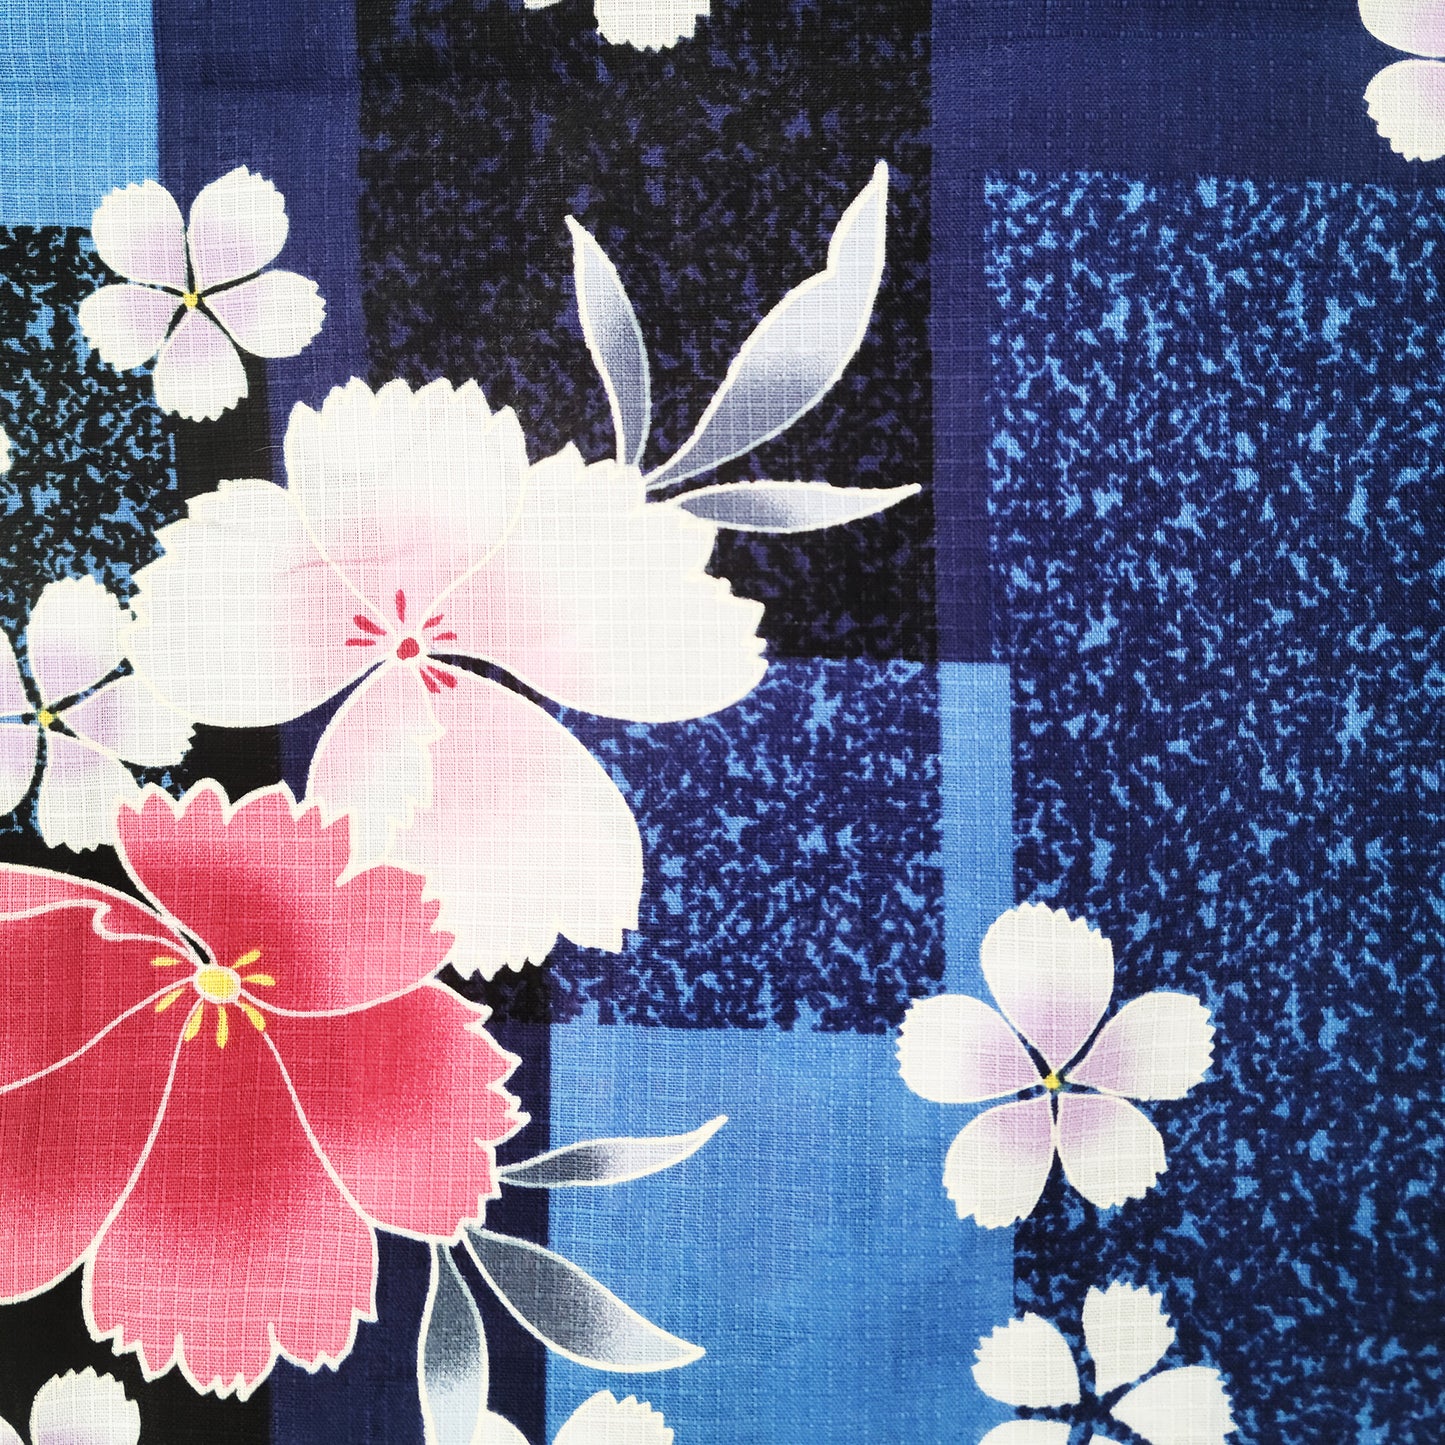 Women's Japanese Yukata Kimono - Pink Cherry Blossoms in Blue 